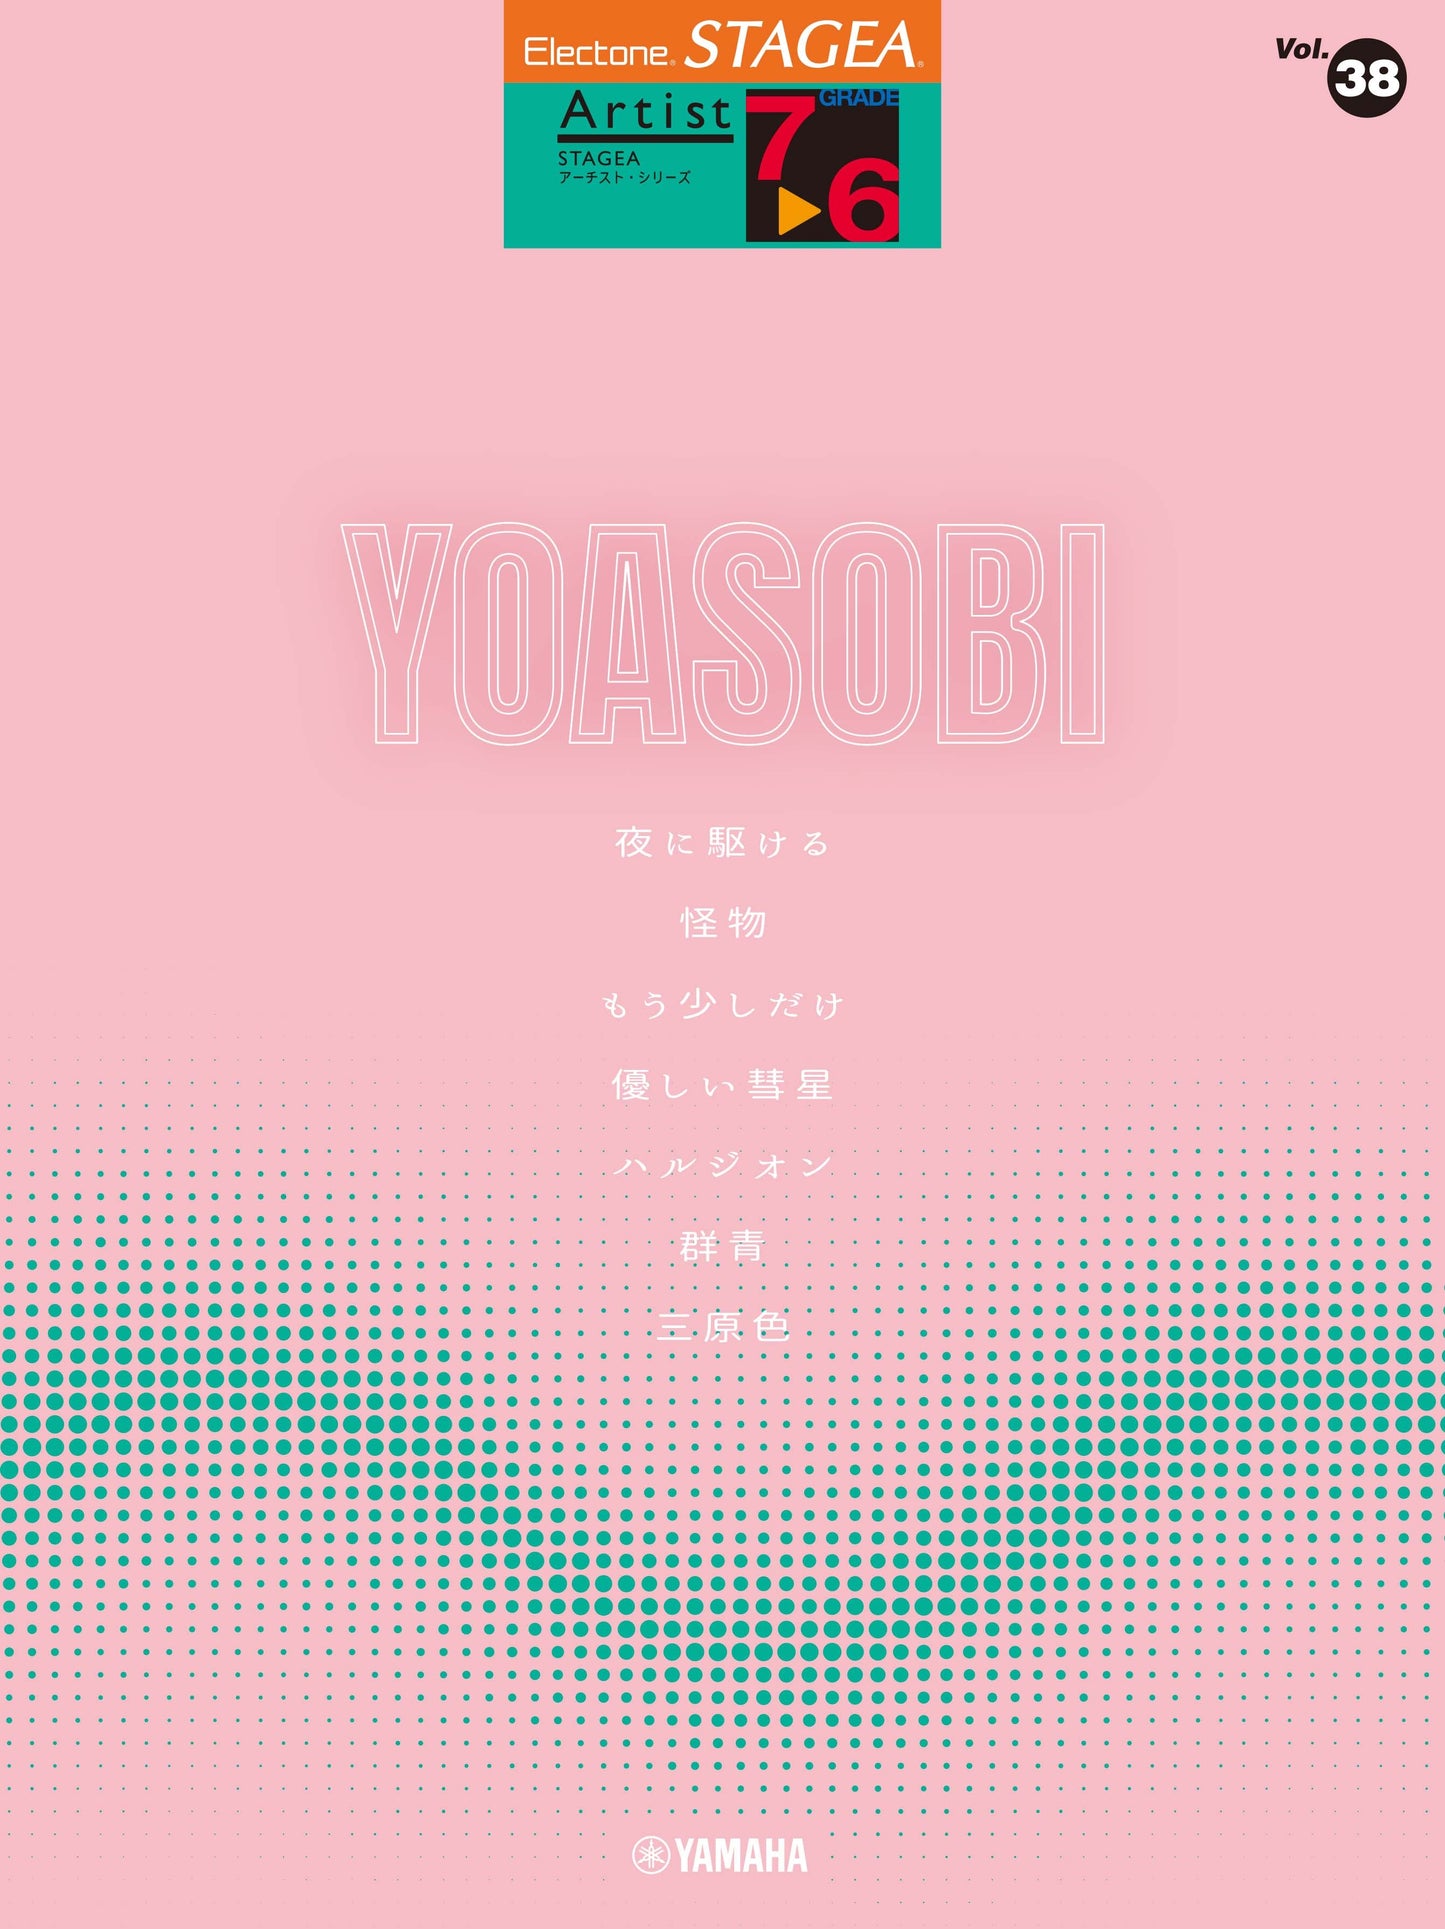 STAGEA アーチスト 7～6級 Vol.38 YOASOBI